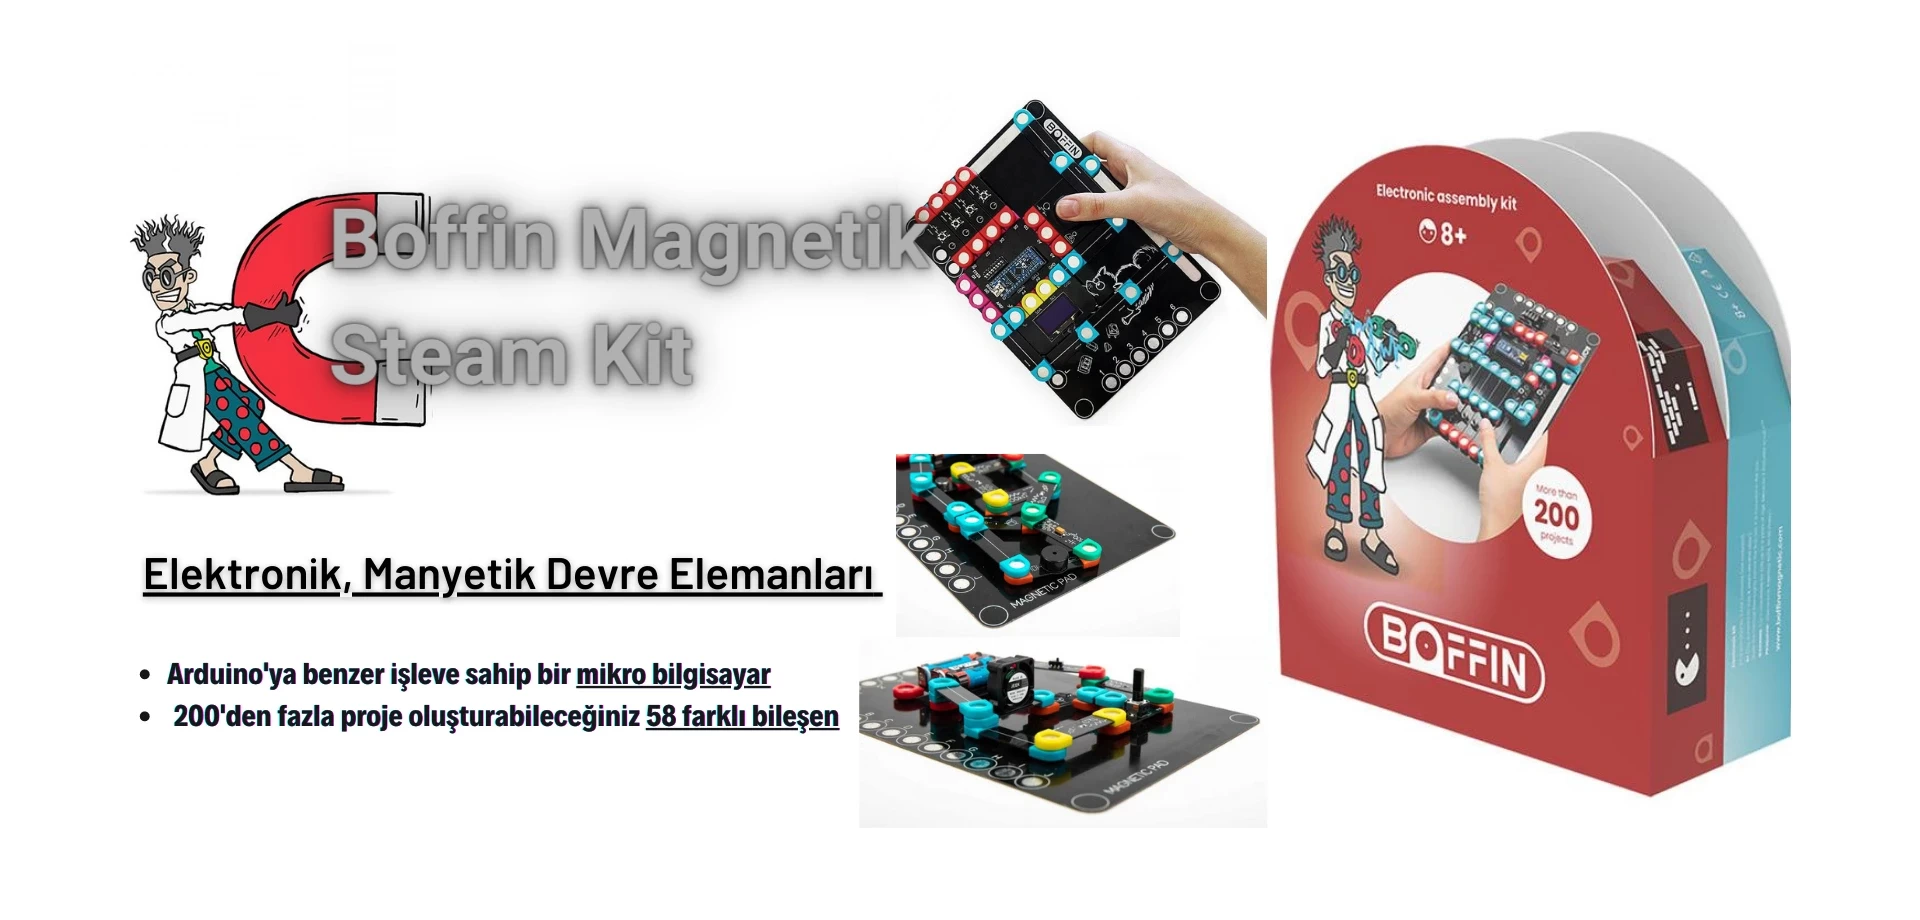 Boffin Magnetik Steam Kit